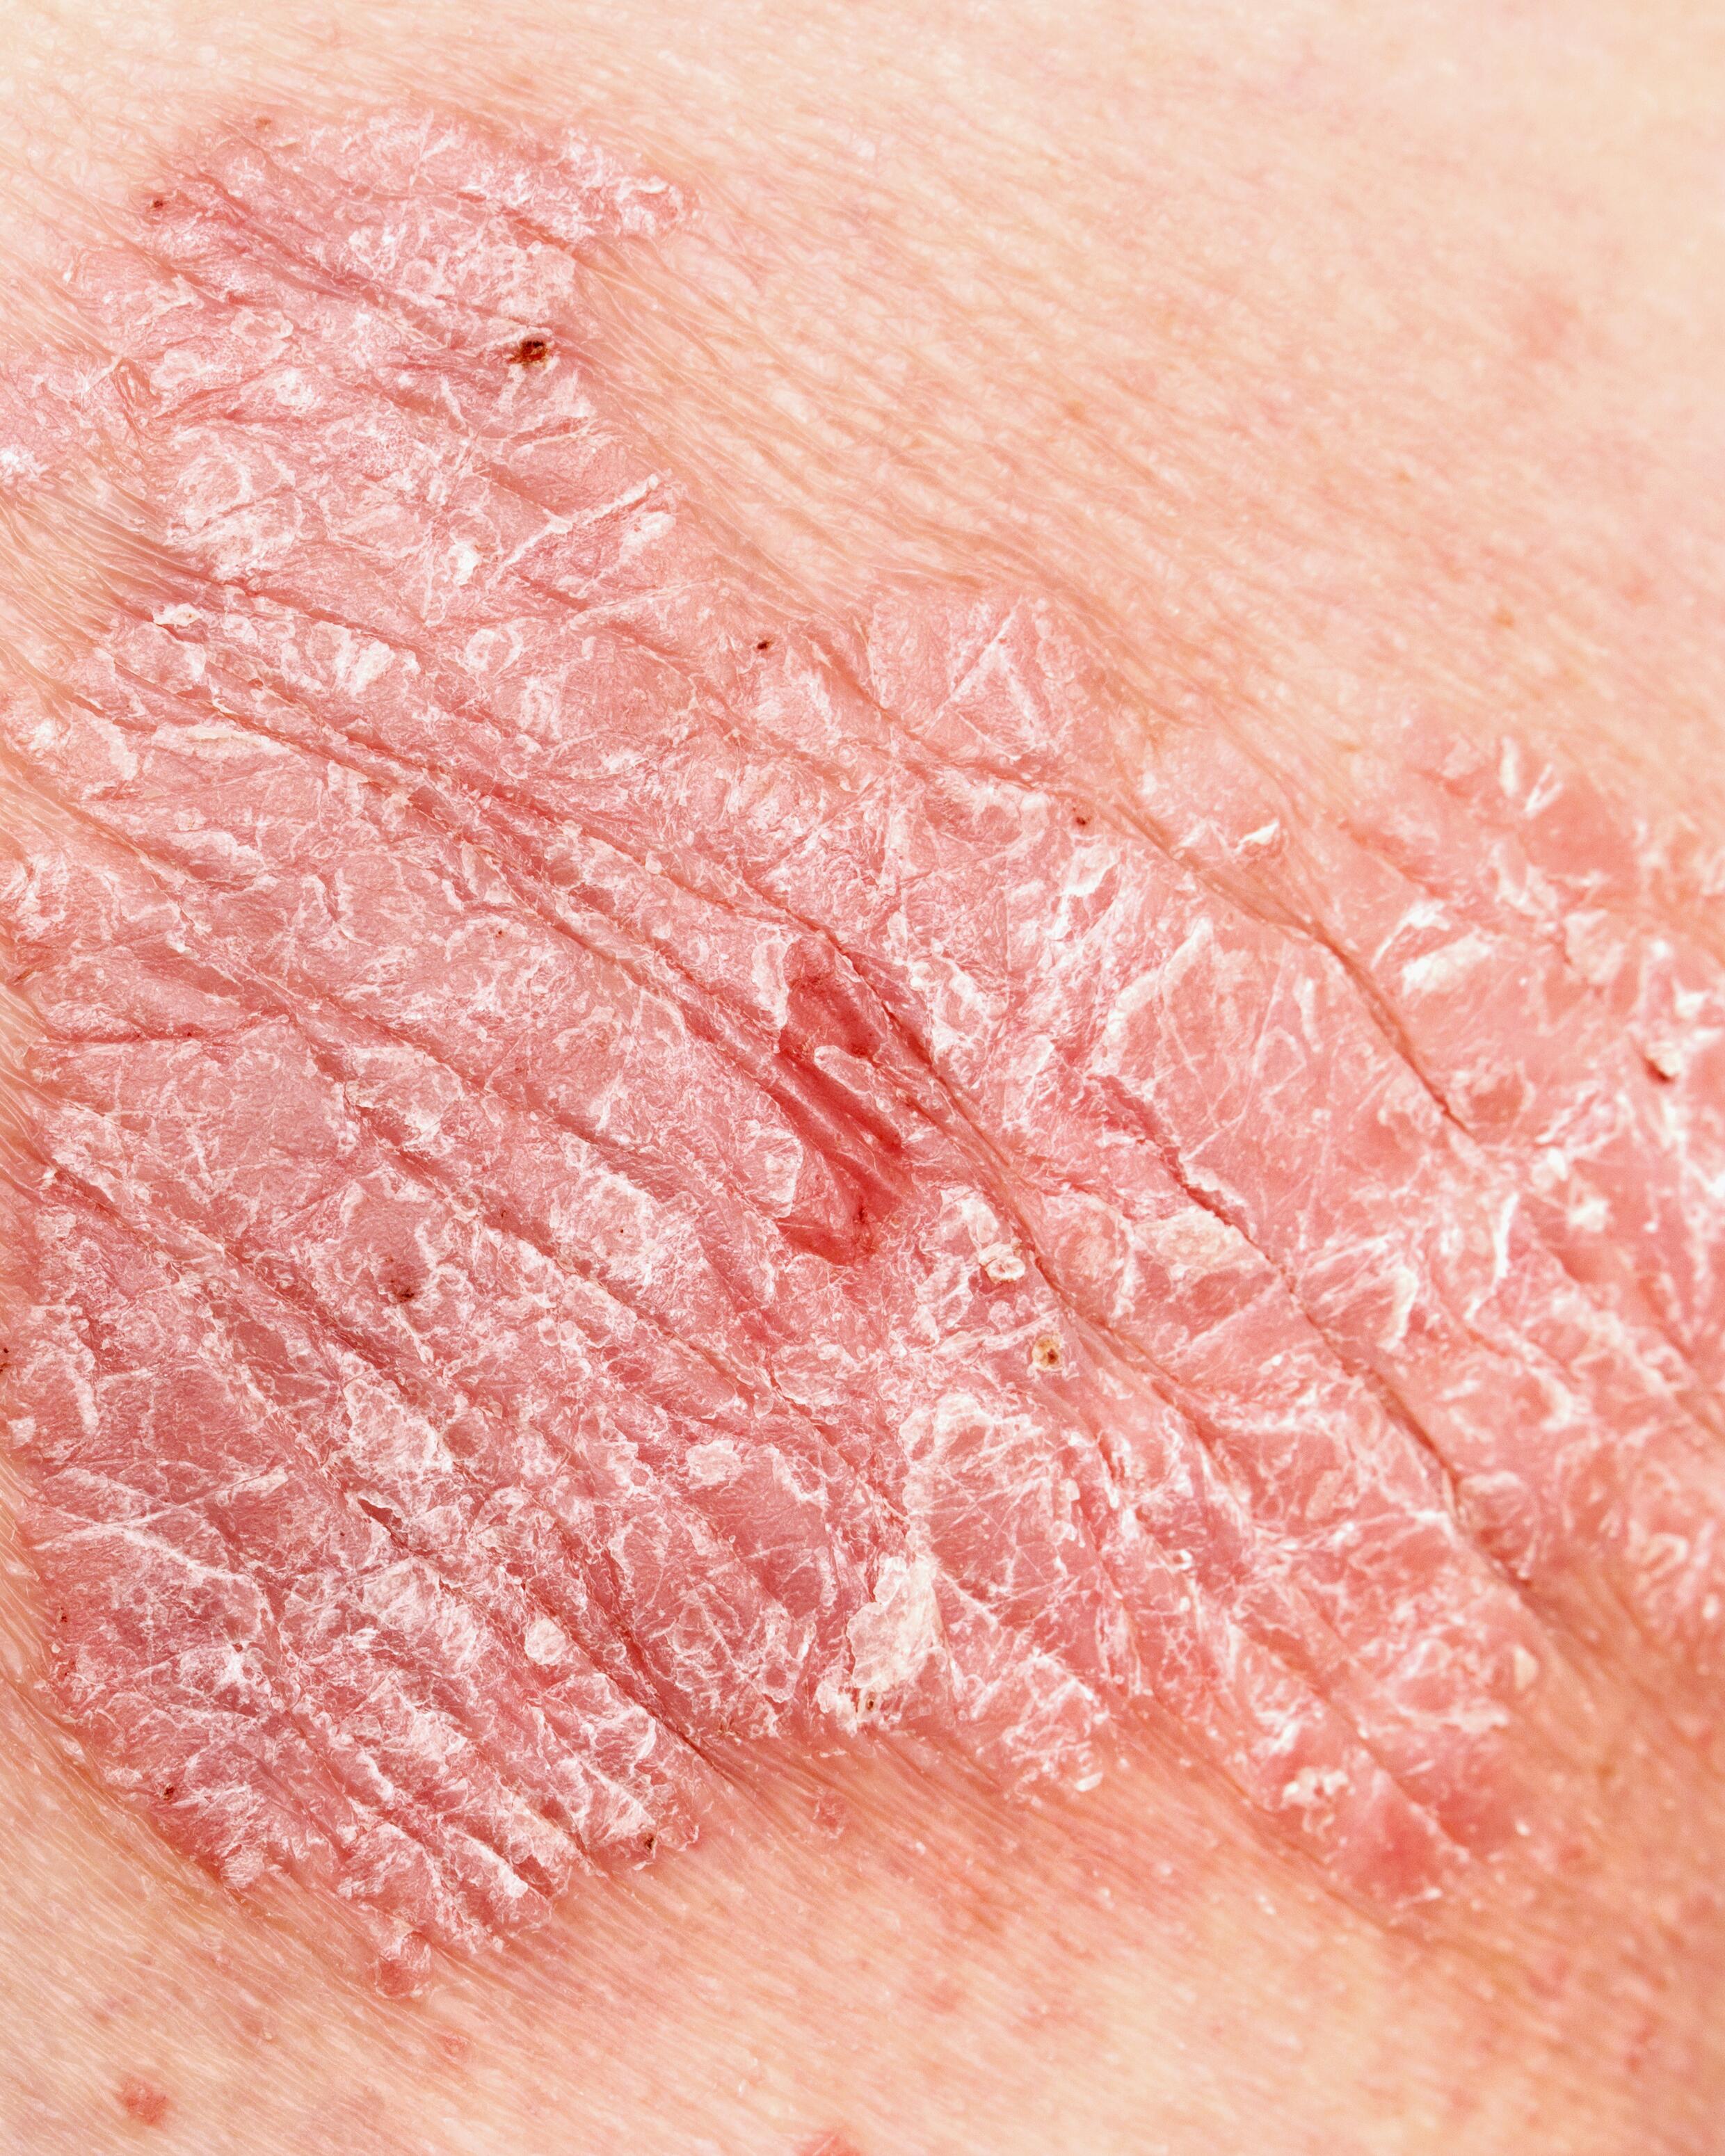 av_eczema-psoriasis_psoriasis_close-up_1x1 368x460